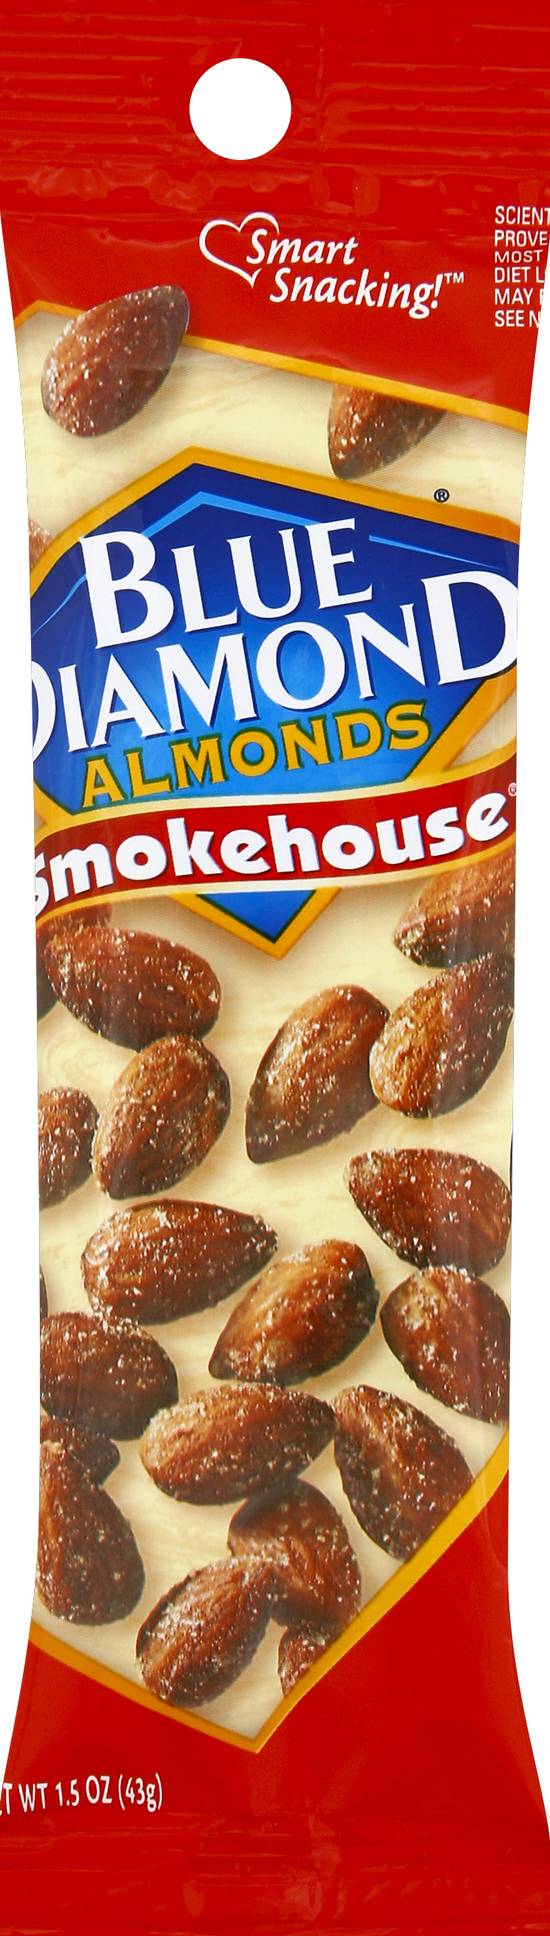 Blue Diamond Smokehouse Flavored Almonds